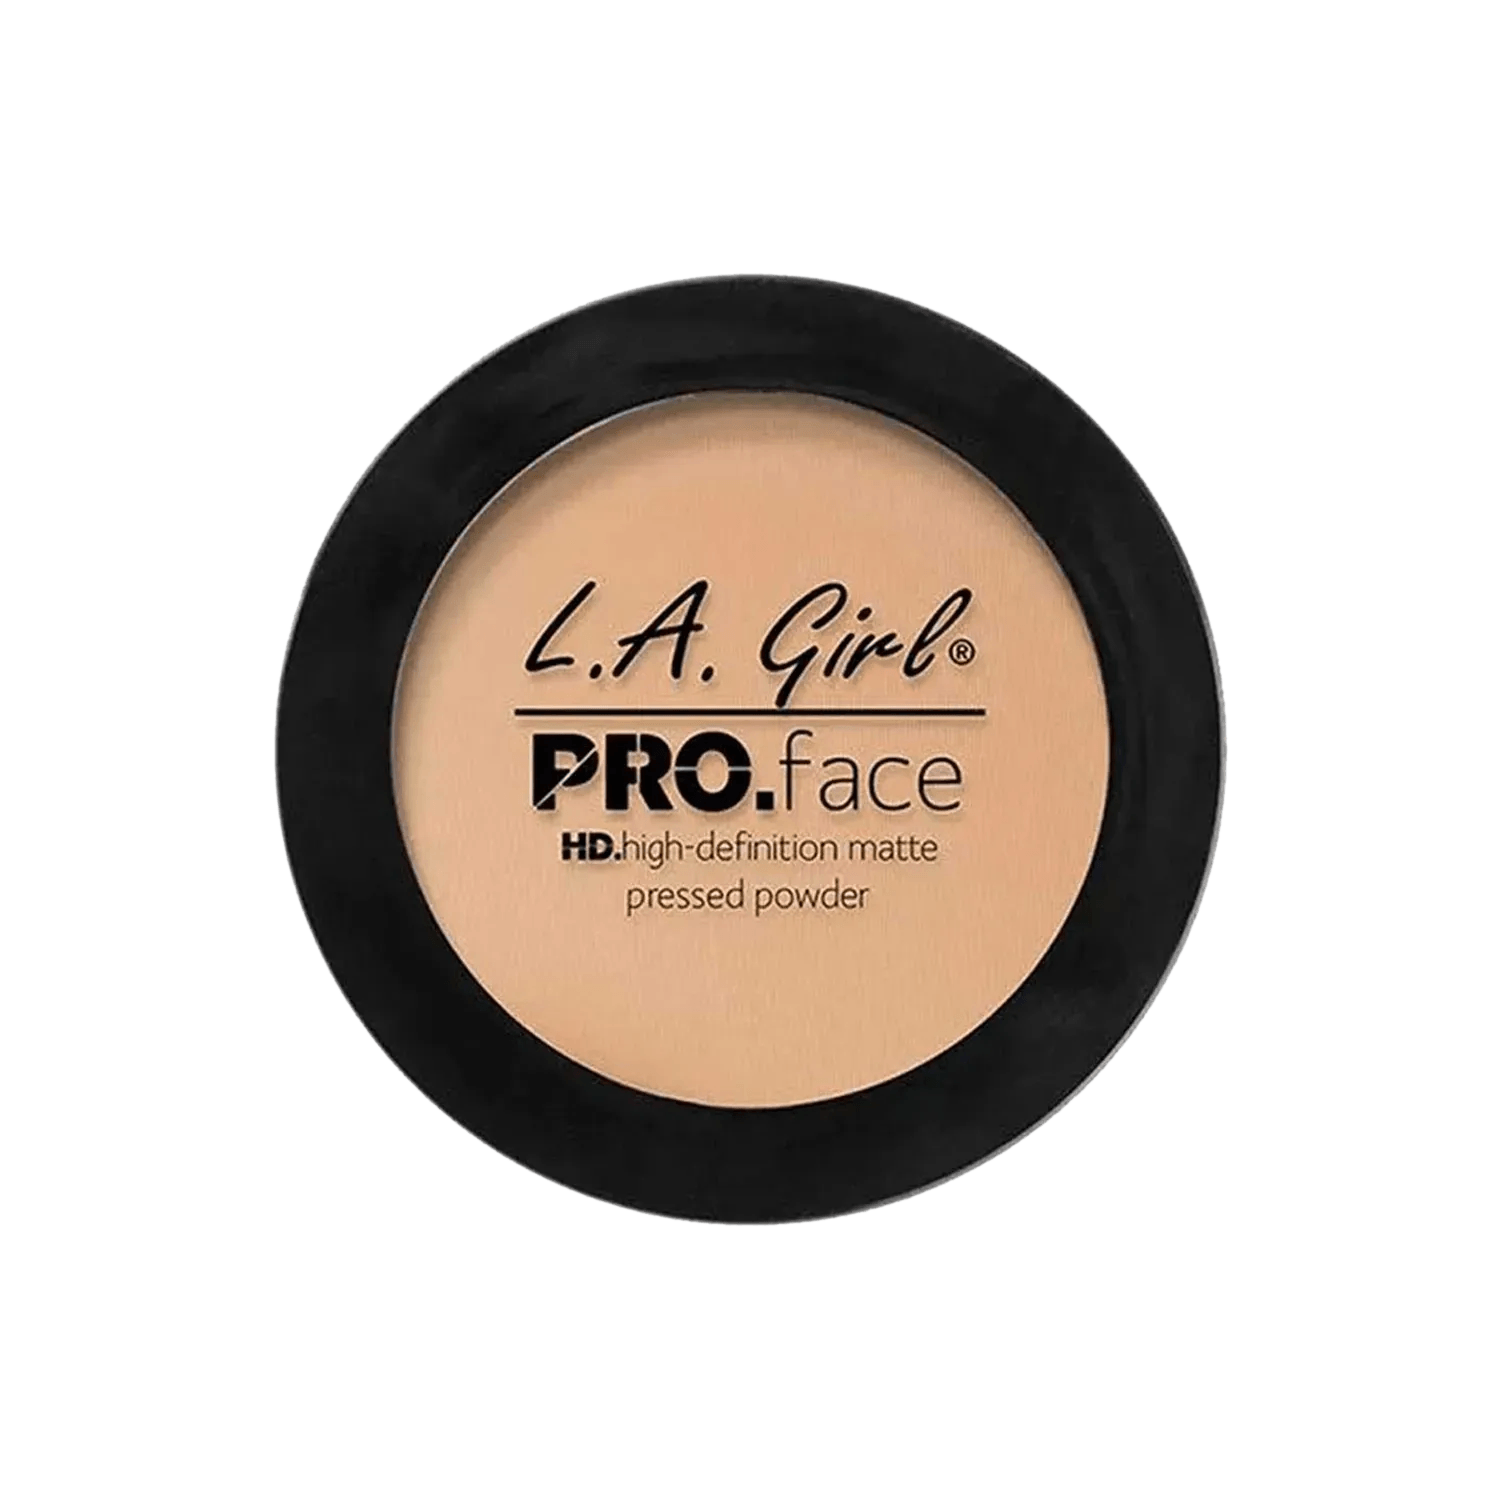 L.A. Girl | L.A. Girl HD PRO Face Pressed Powder Nude Beige (7g)